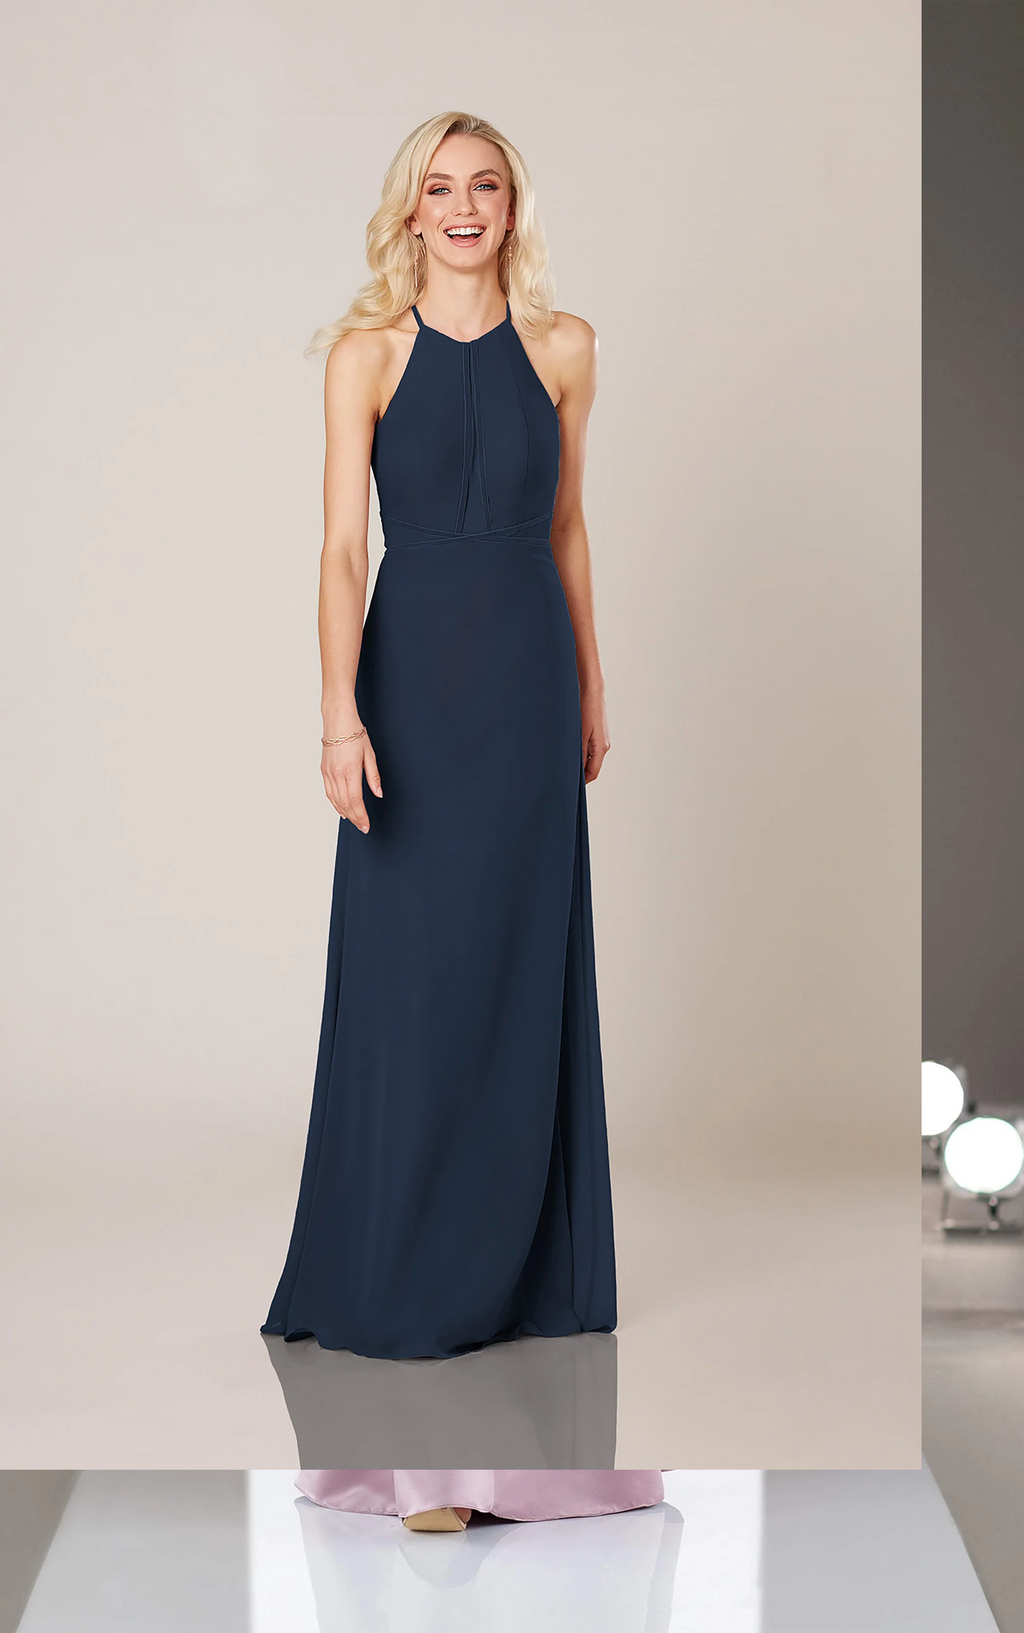 Sorella Vita Dress Style 9330 (Navy-Size 12) Prom, Ball., Black-tie, Bridesmaid, Pageant